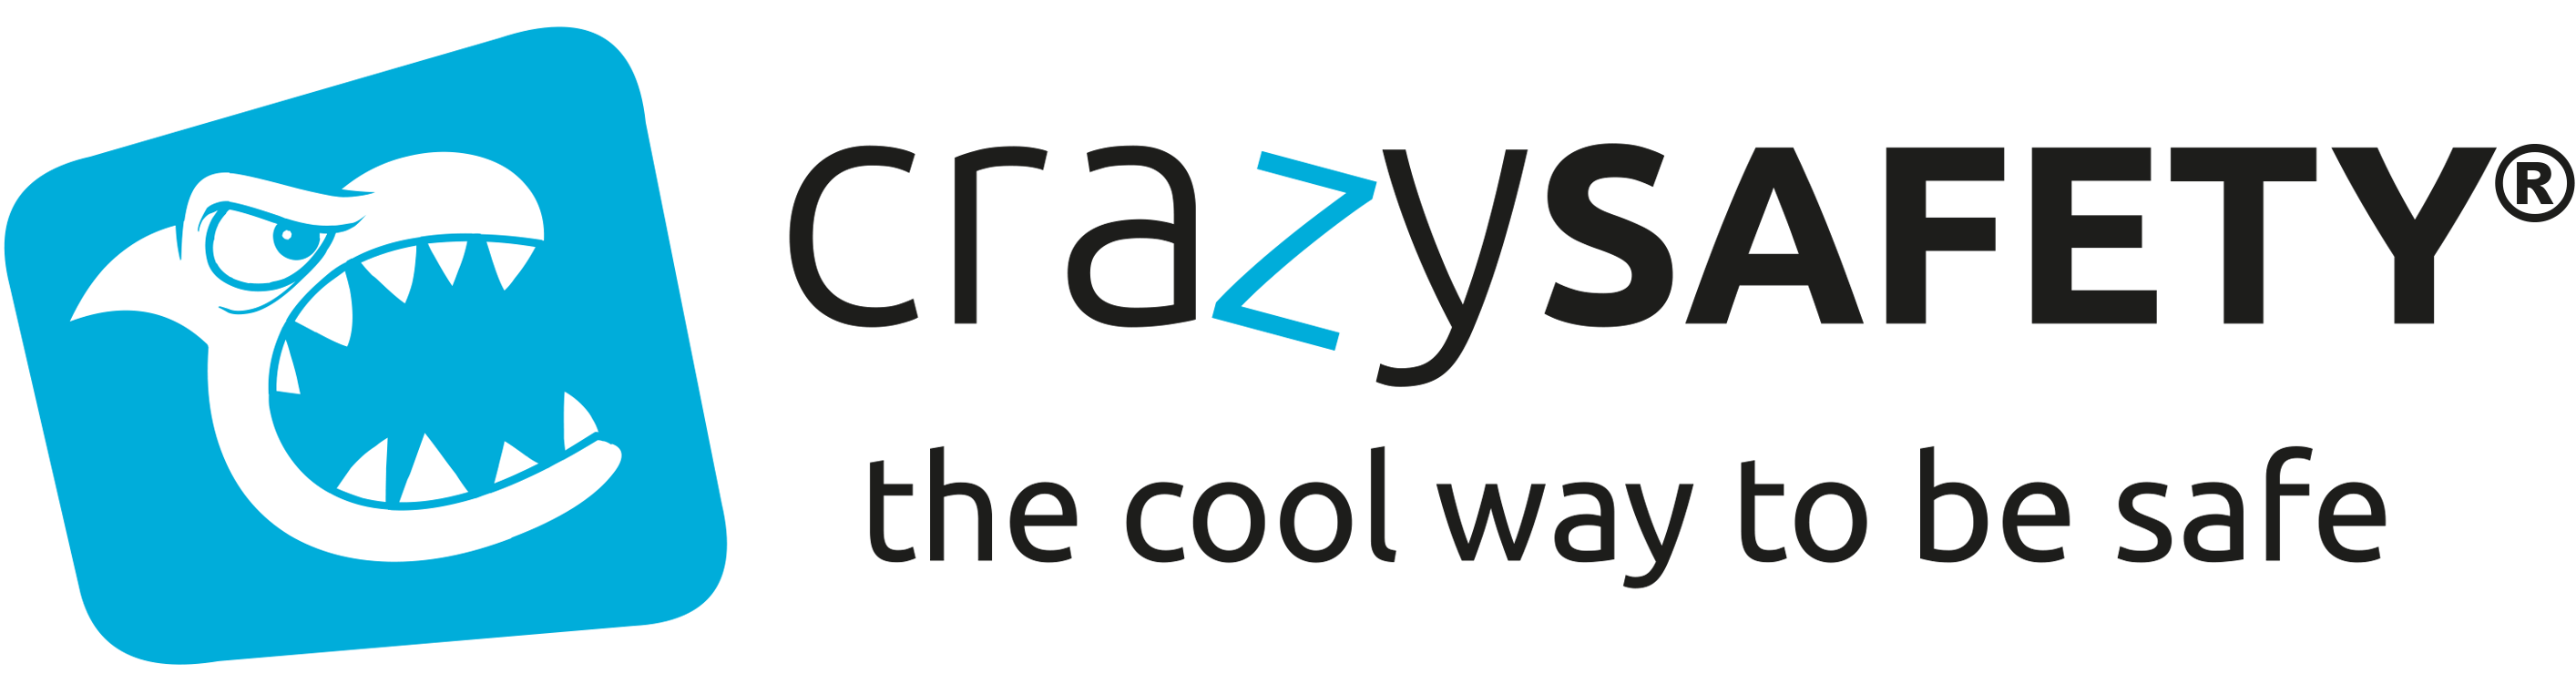 Crazy Safety Help Center logo